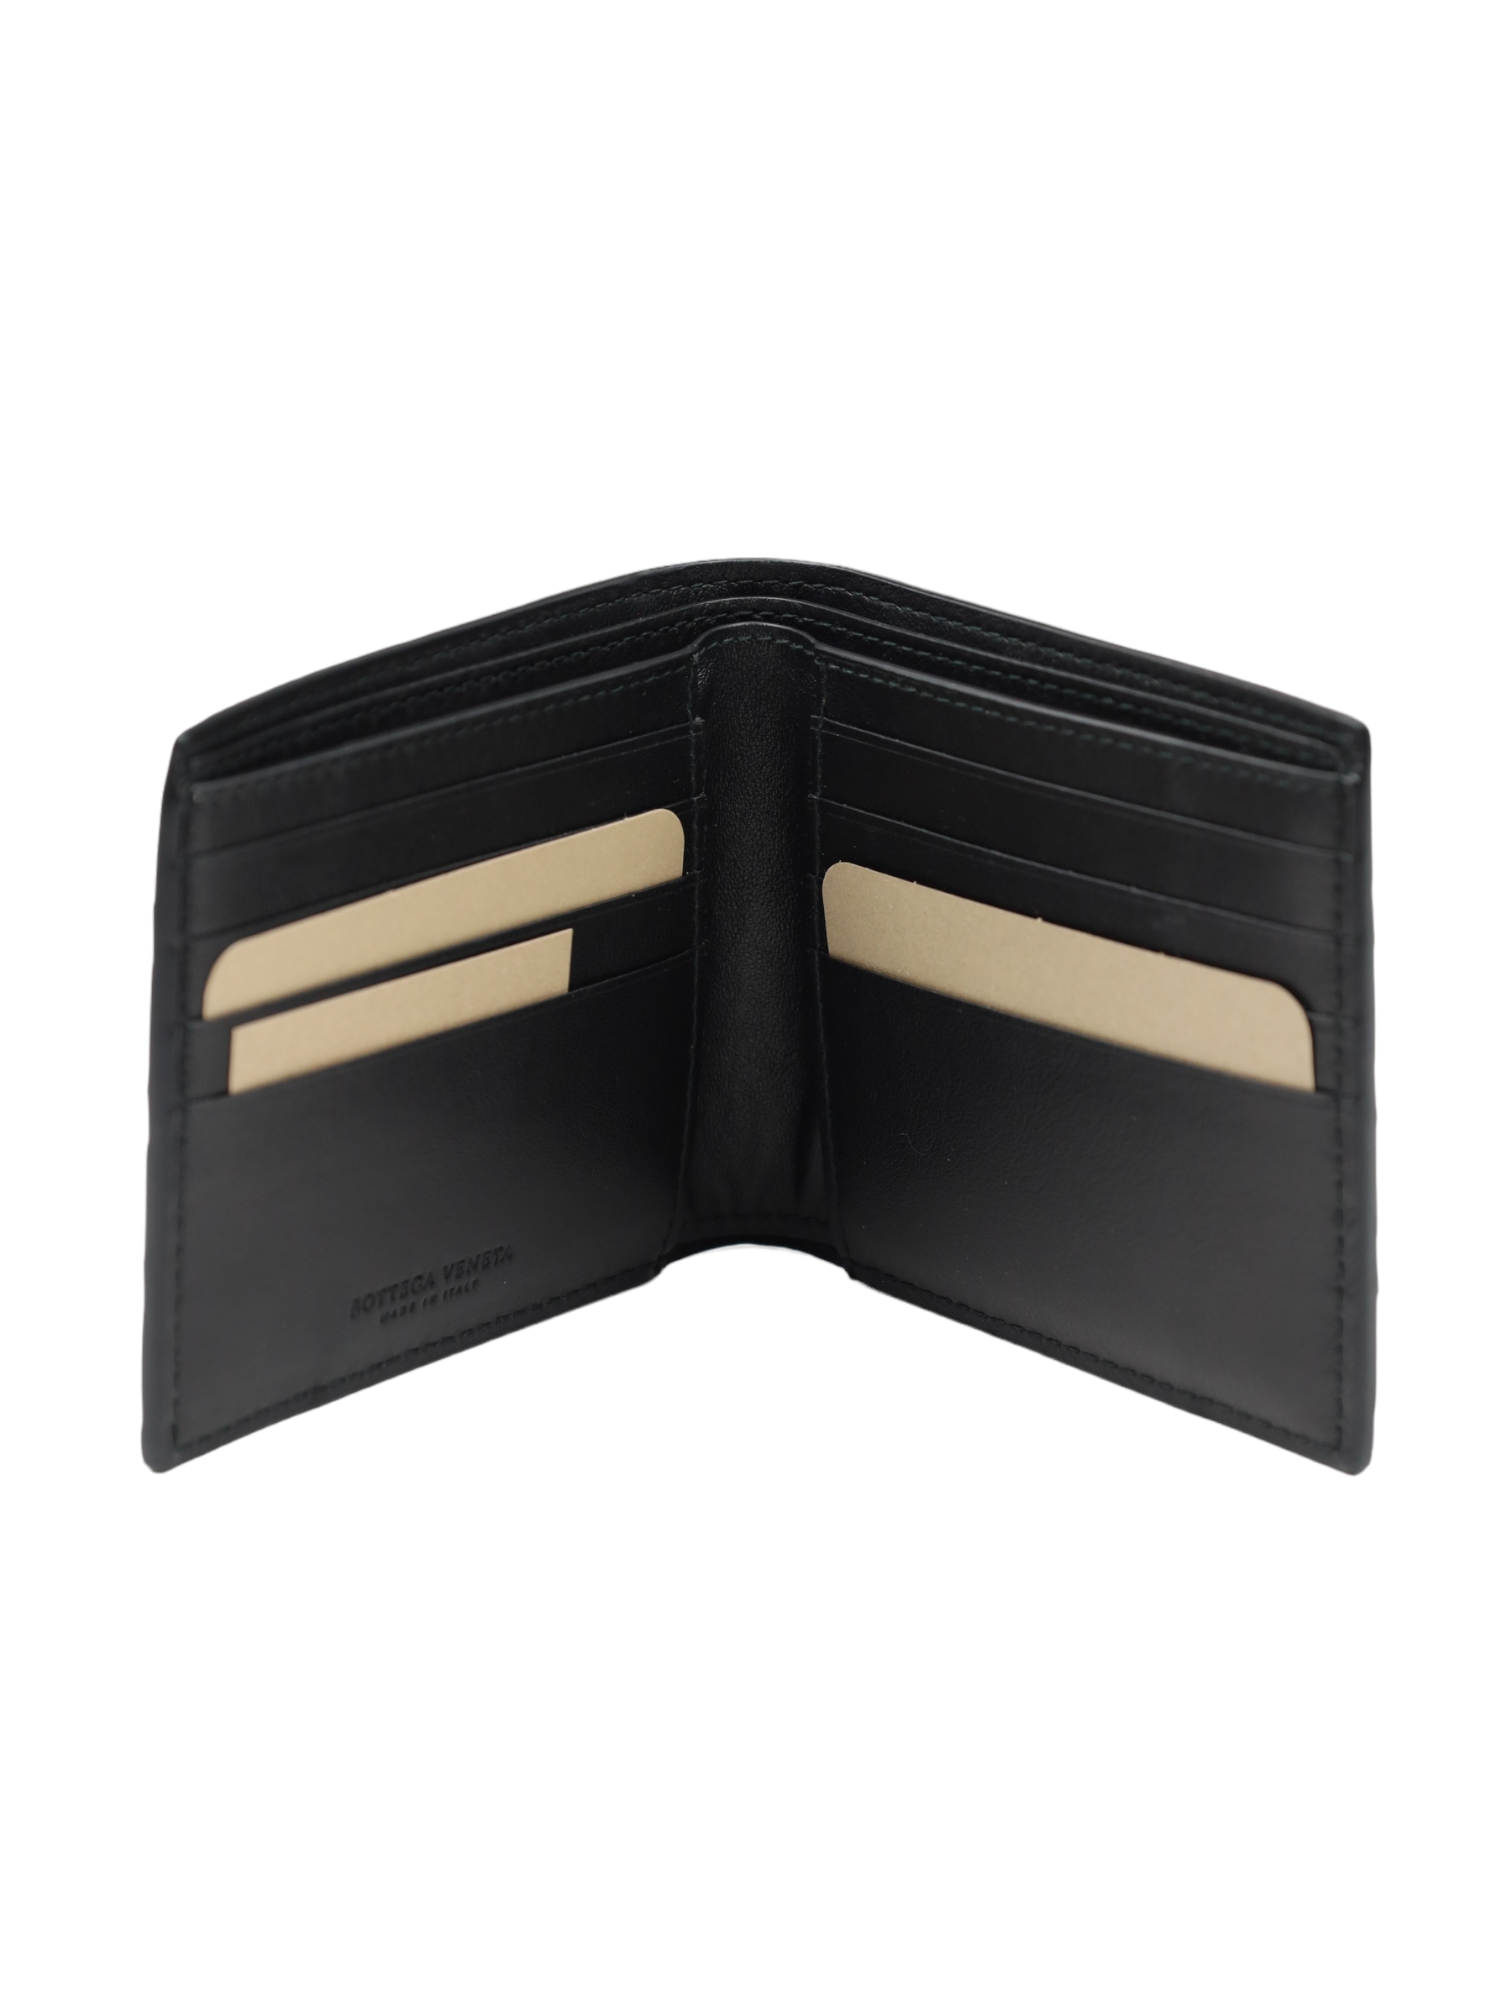 Bottega Veneta Black Intrecciato Leather Billfold Wallet